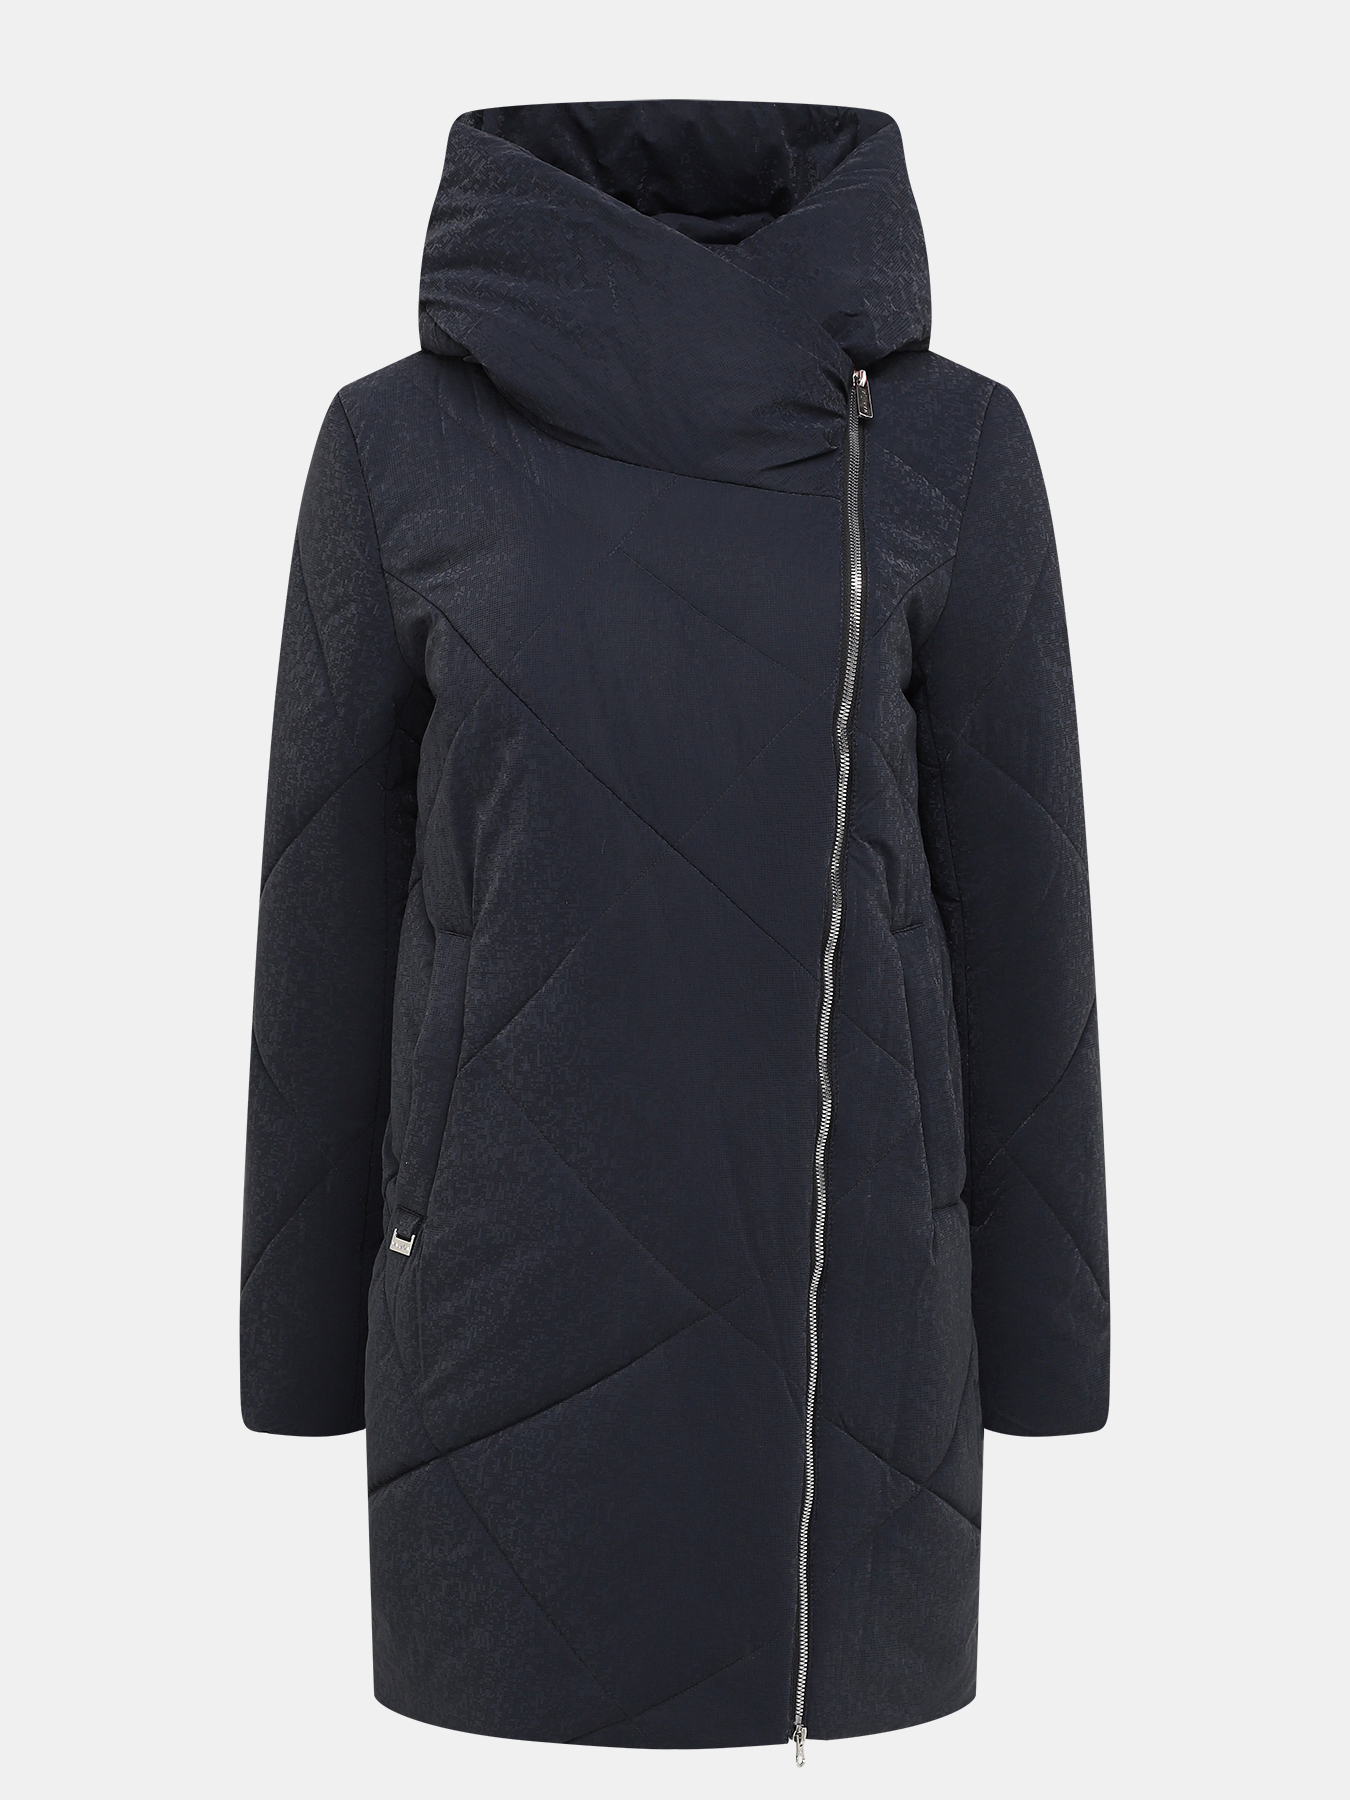 Пальто зимнее Maritta 433549-023, цвет темно-синий, размер 50